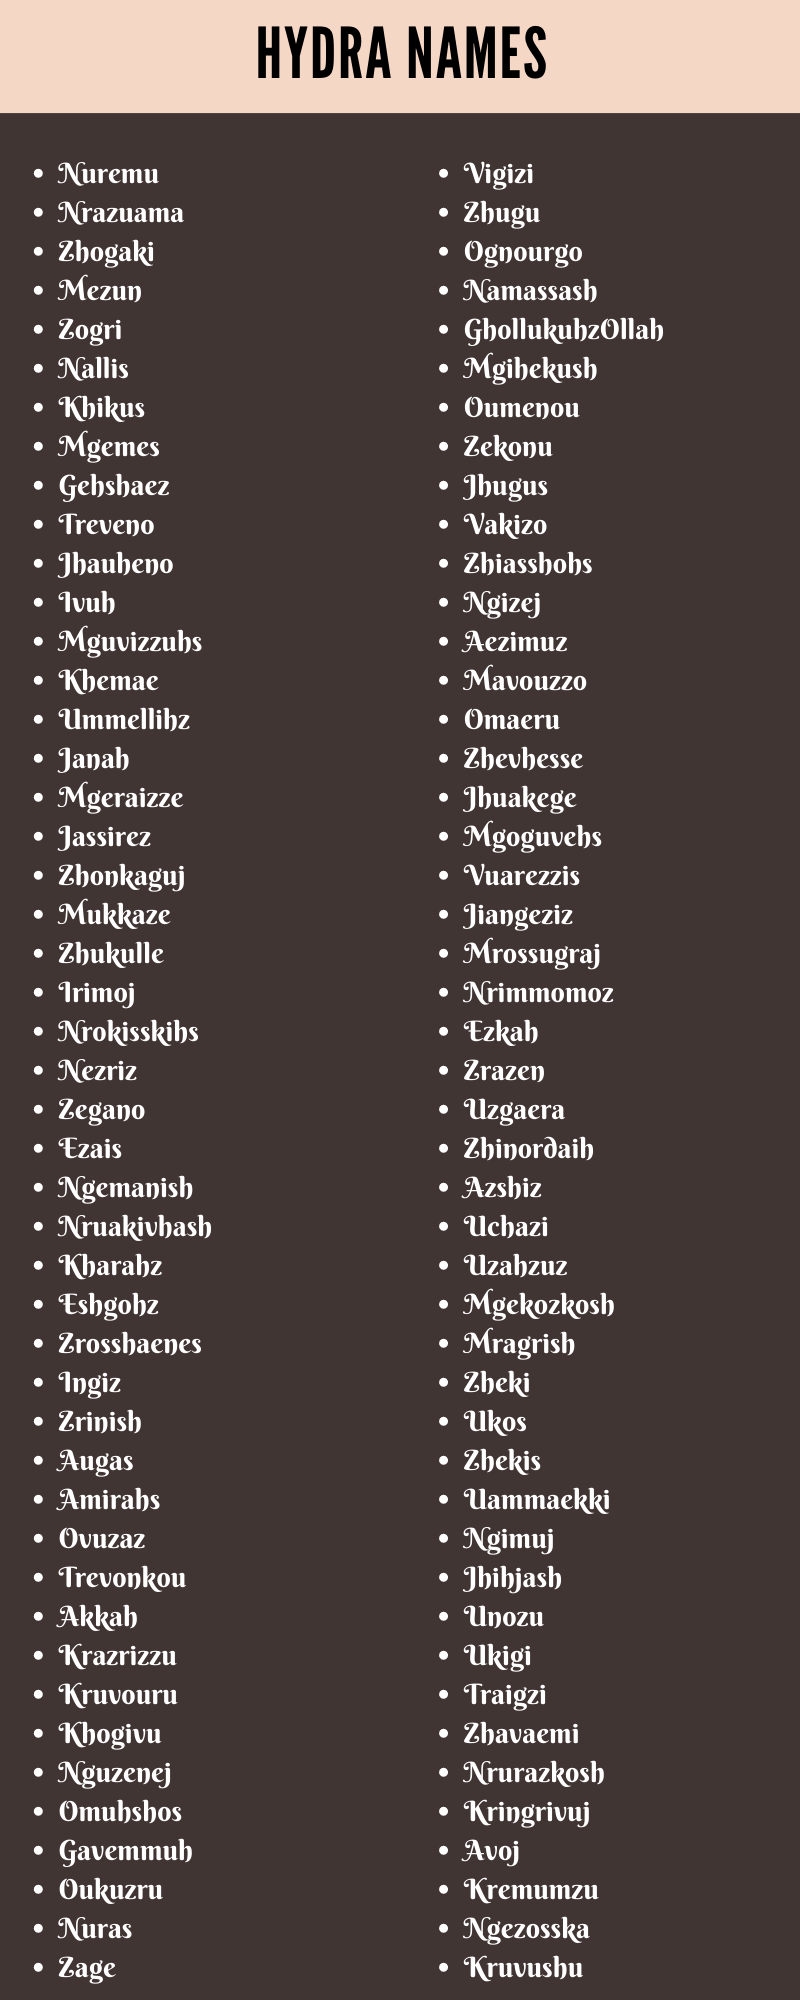 Hydra Names